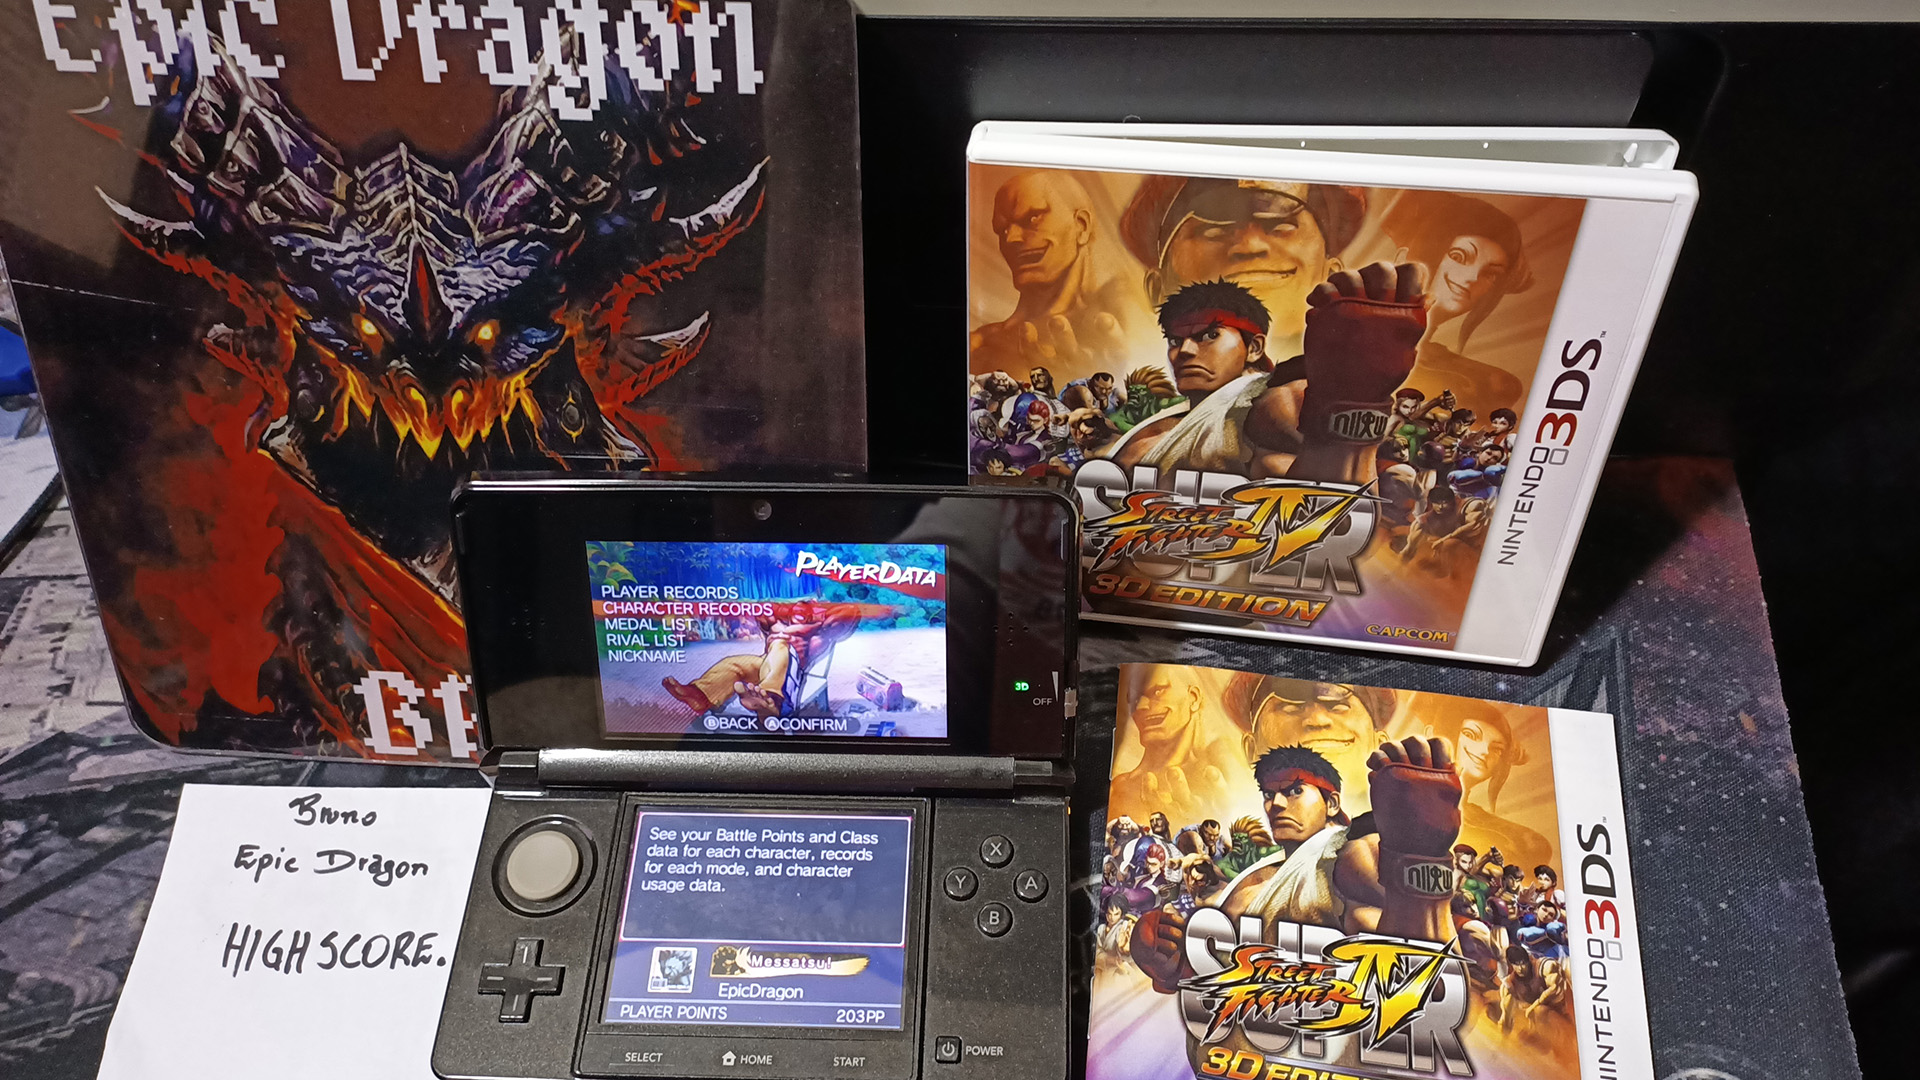 EpicDragon: Super Street Fighter IV 3D Edition: Challenge: Barrel Buster: Ryu (Nintendo 3DS) 61,100 points on 2022-08-17 21:10:31